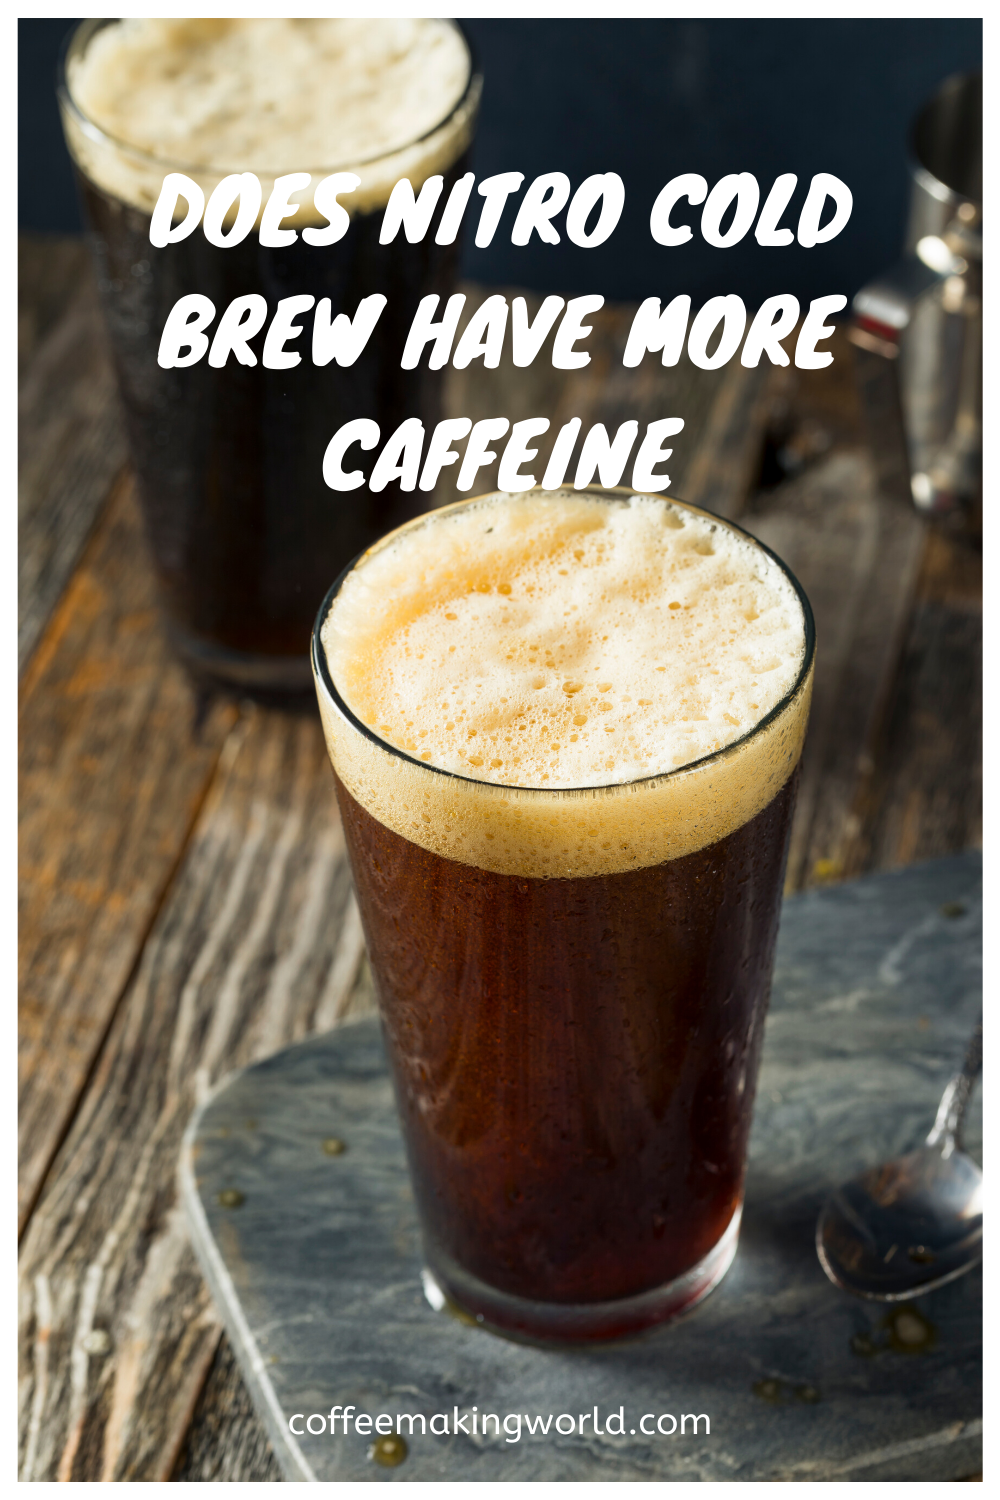 DOES NITRO COLD BREW HAVE MORE CAFFEINE